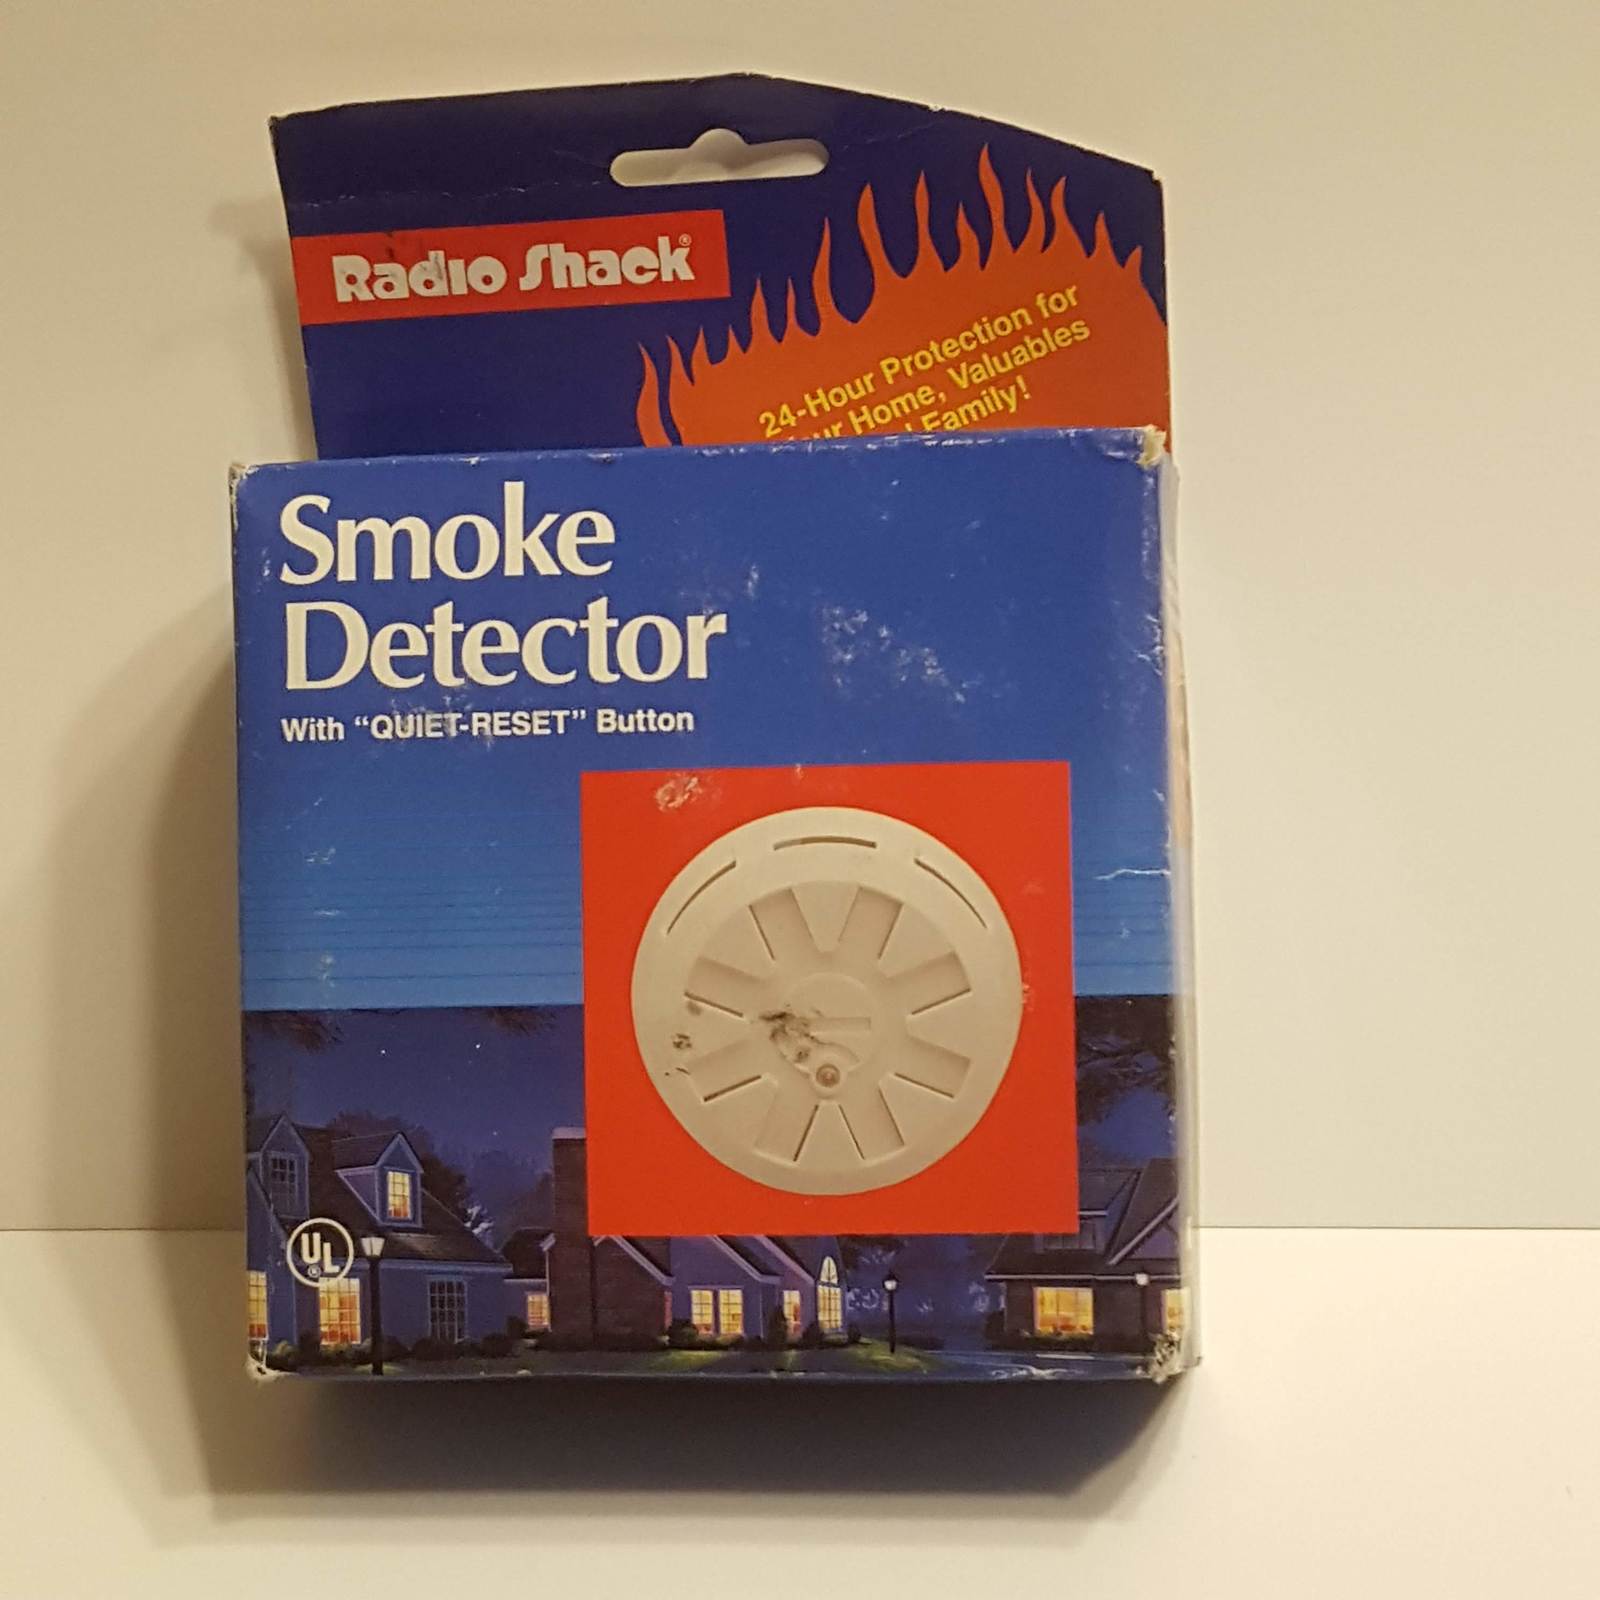 RADIO SHACK SMOKE DETECTOR QUIET RESET #49-466 .  New, open box - $11.00